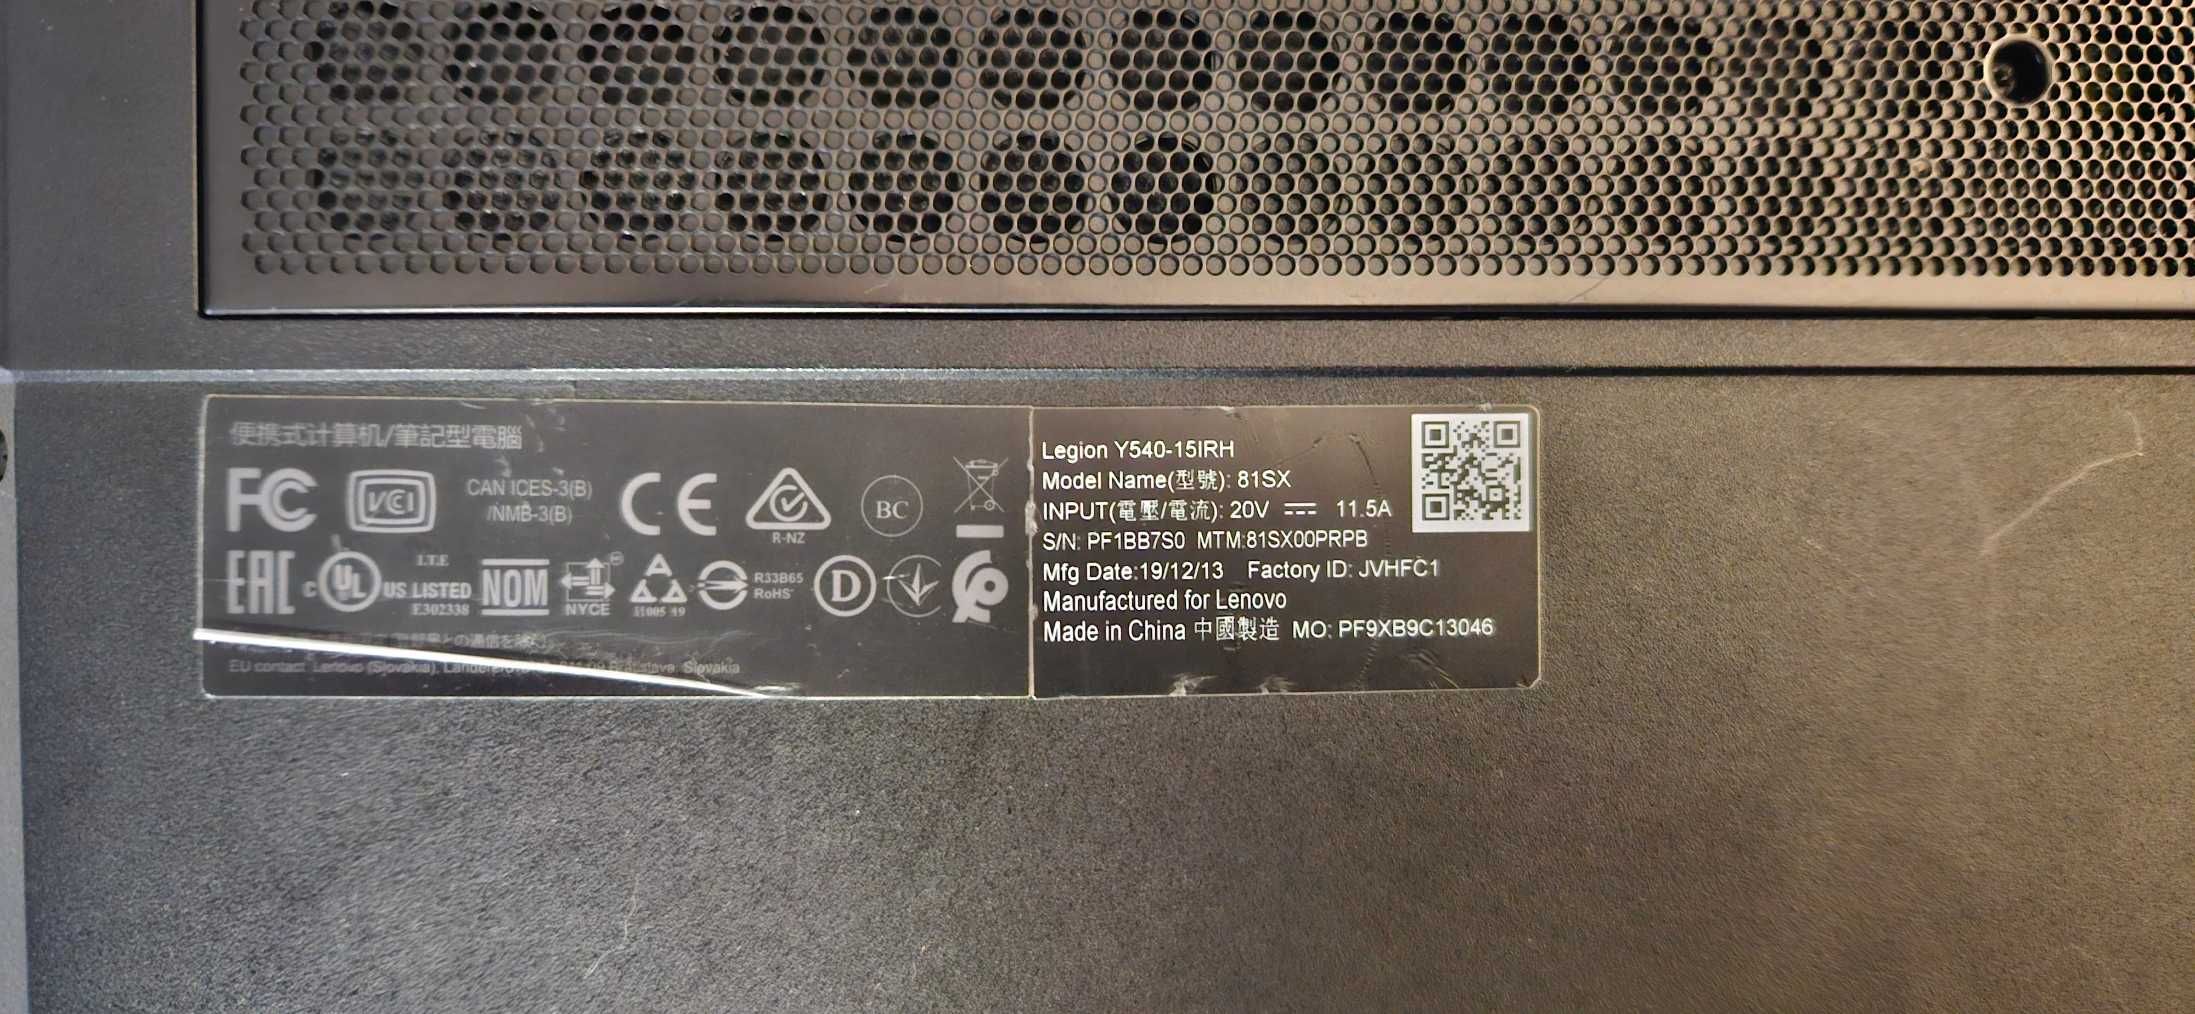 Lenovo Legion Y540-15 i7-9750H/16GB/256 GTX1660Ti